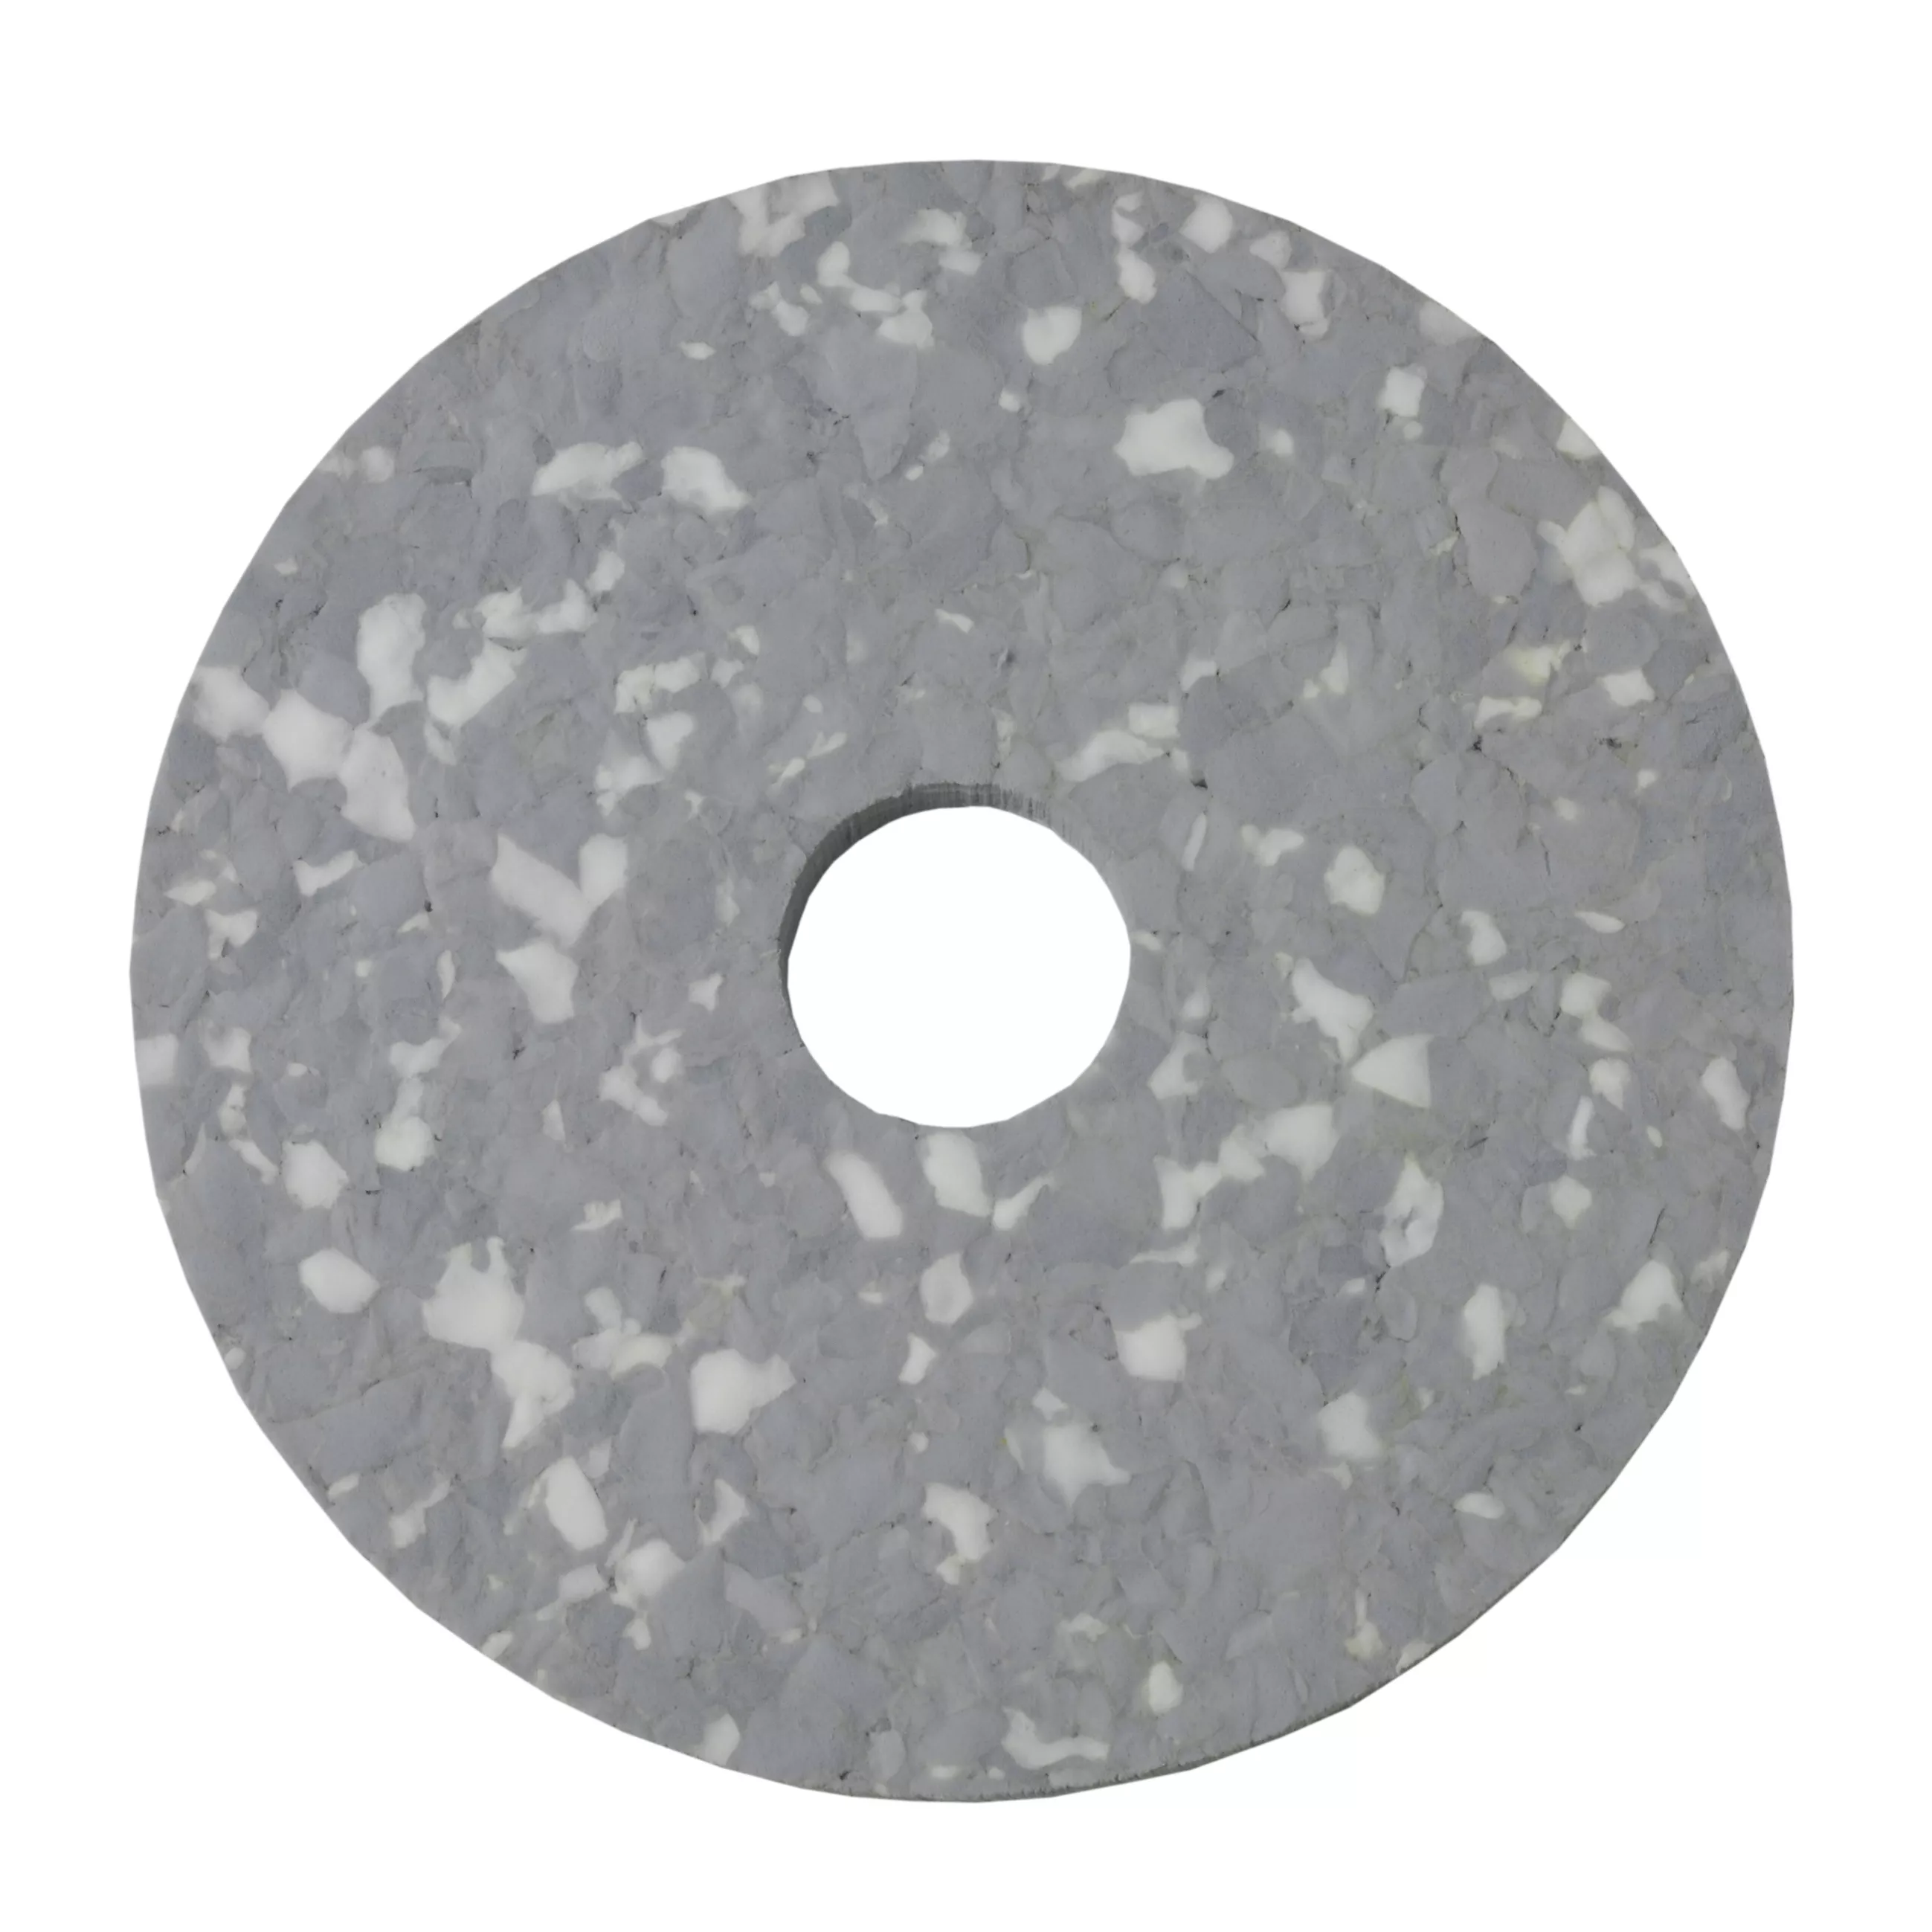 3M™ Melamine Floor Pad, Grey/White, 432 mm, 5/Case